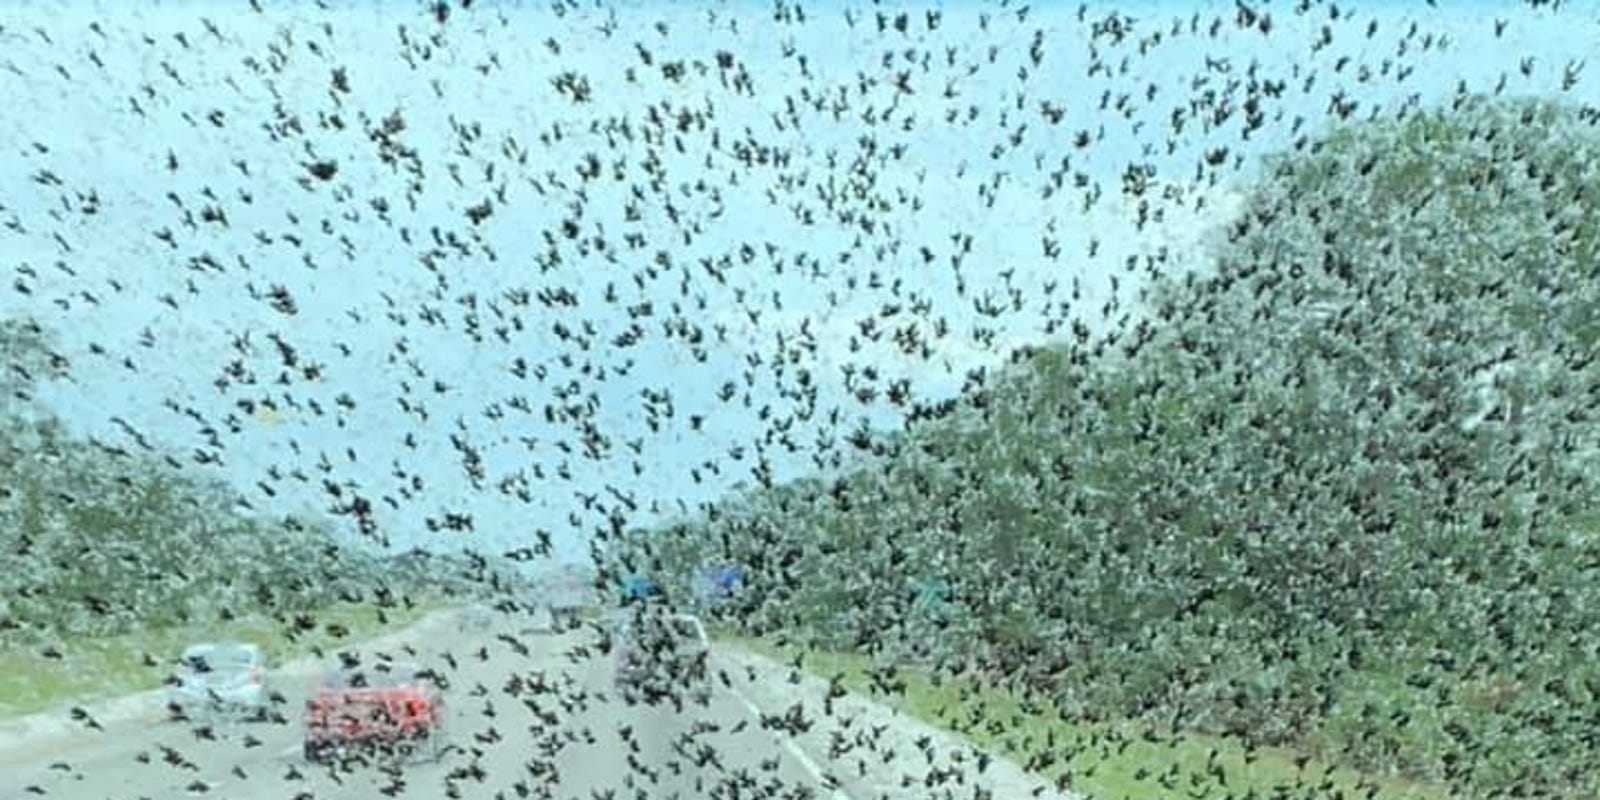 Florida lovebug invasion Do they have a purpose?